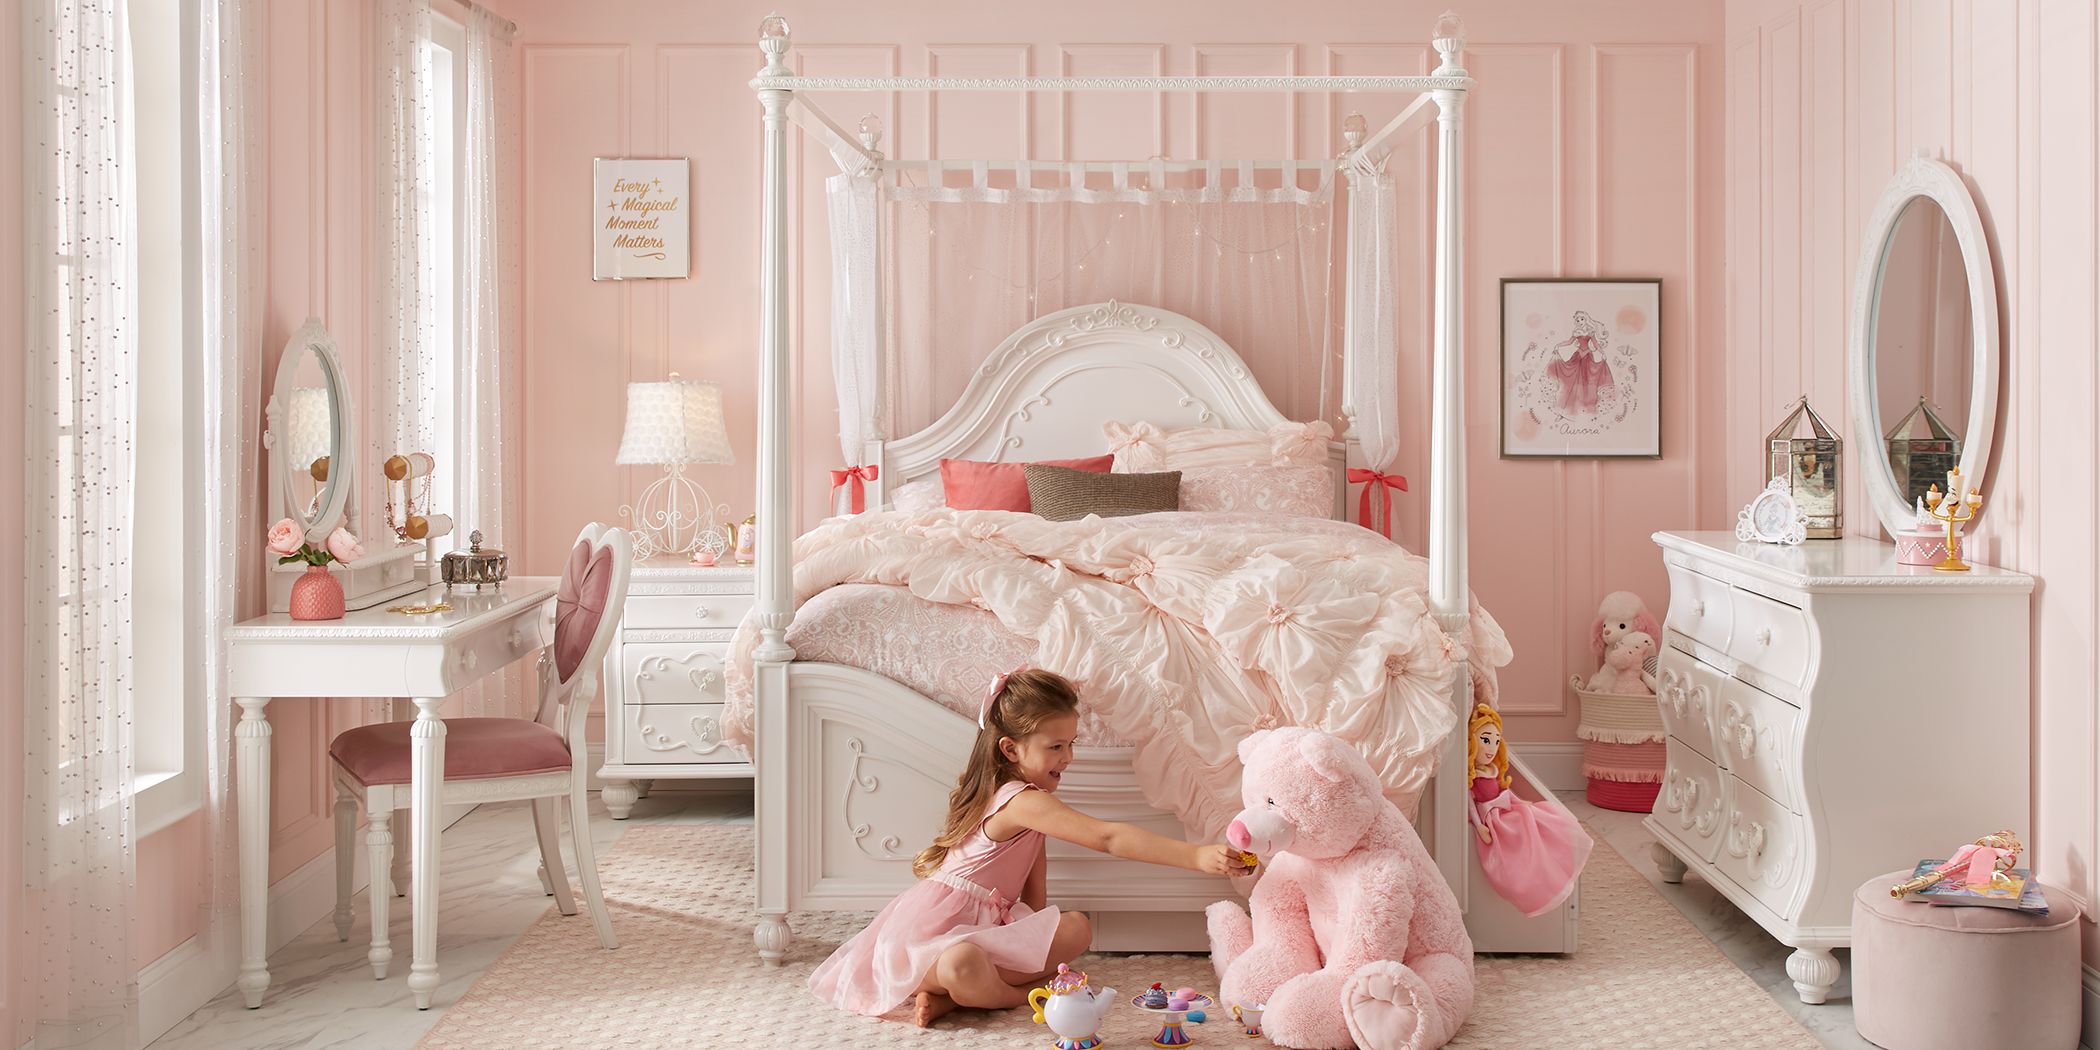 white princess bedroom furniture